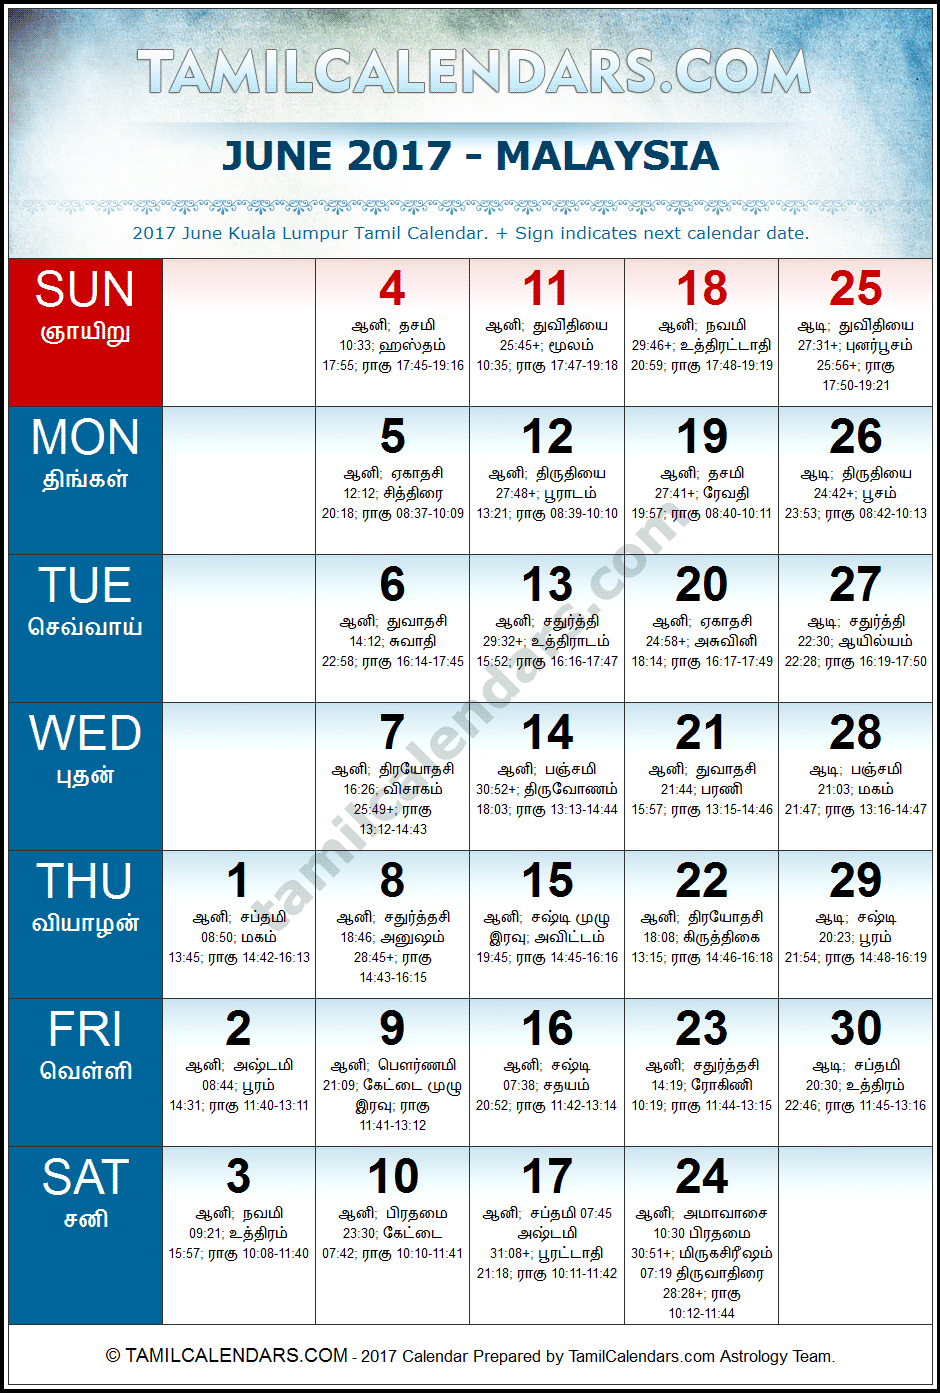 June 2017 Tamil Calendar for Malaysia (Kuala Lumpur)